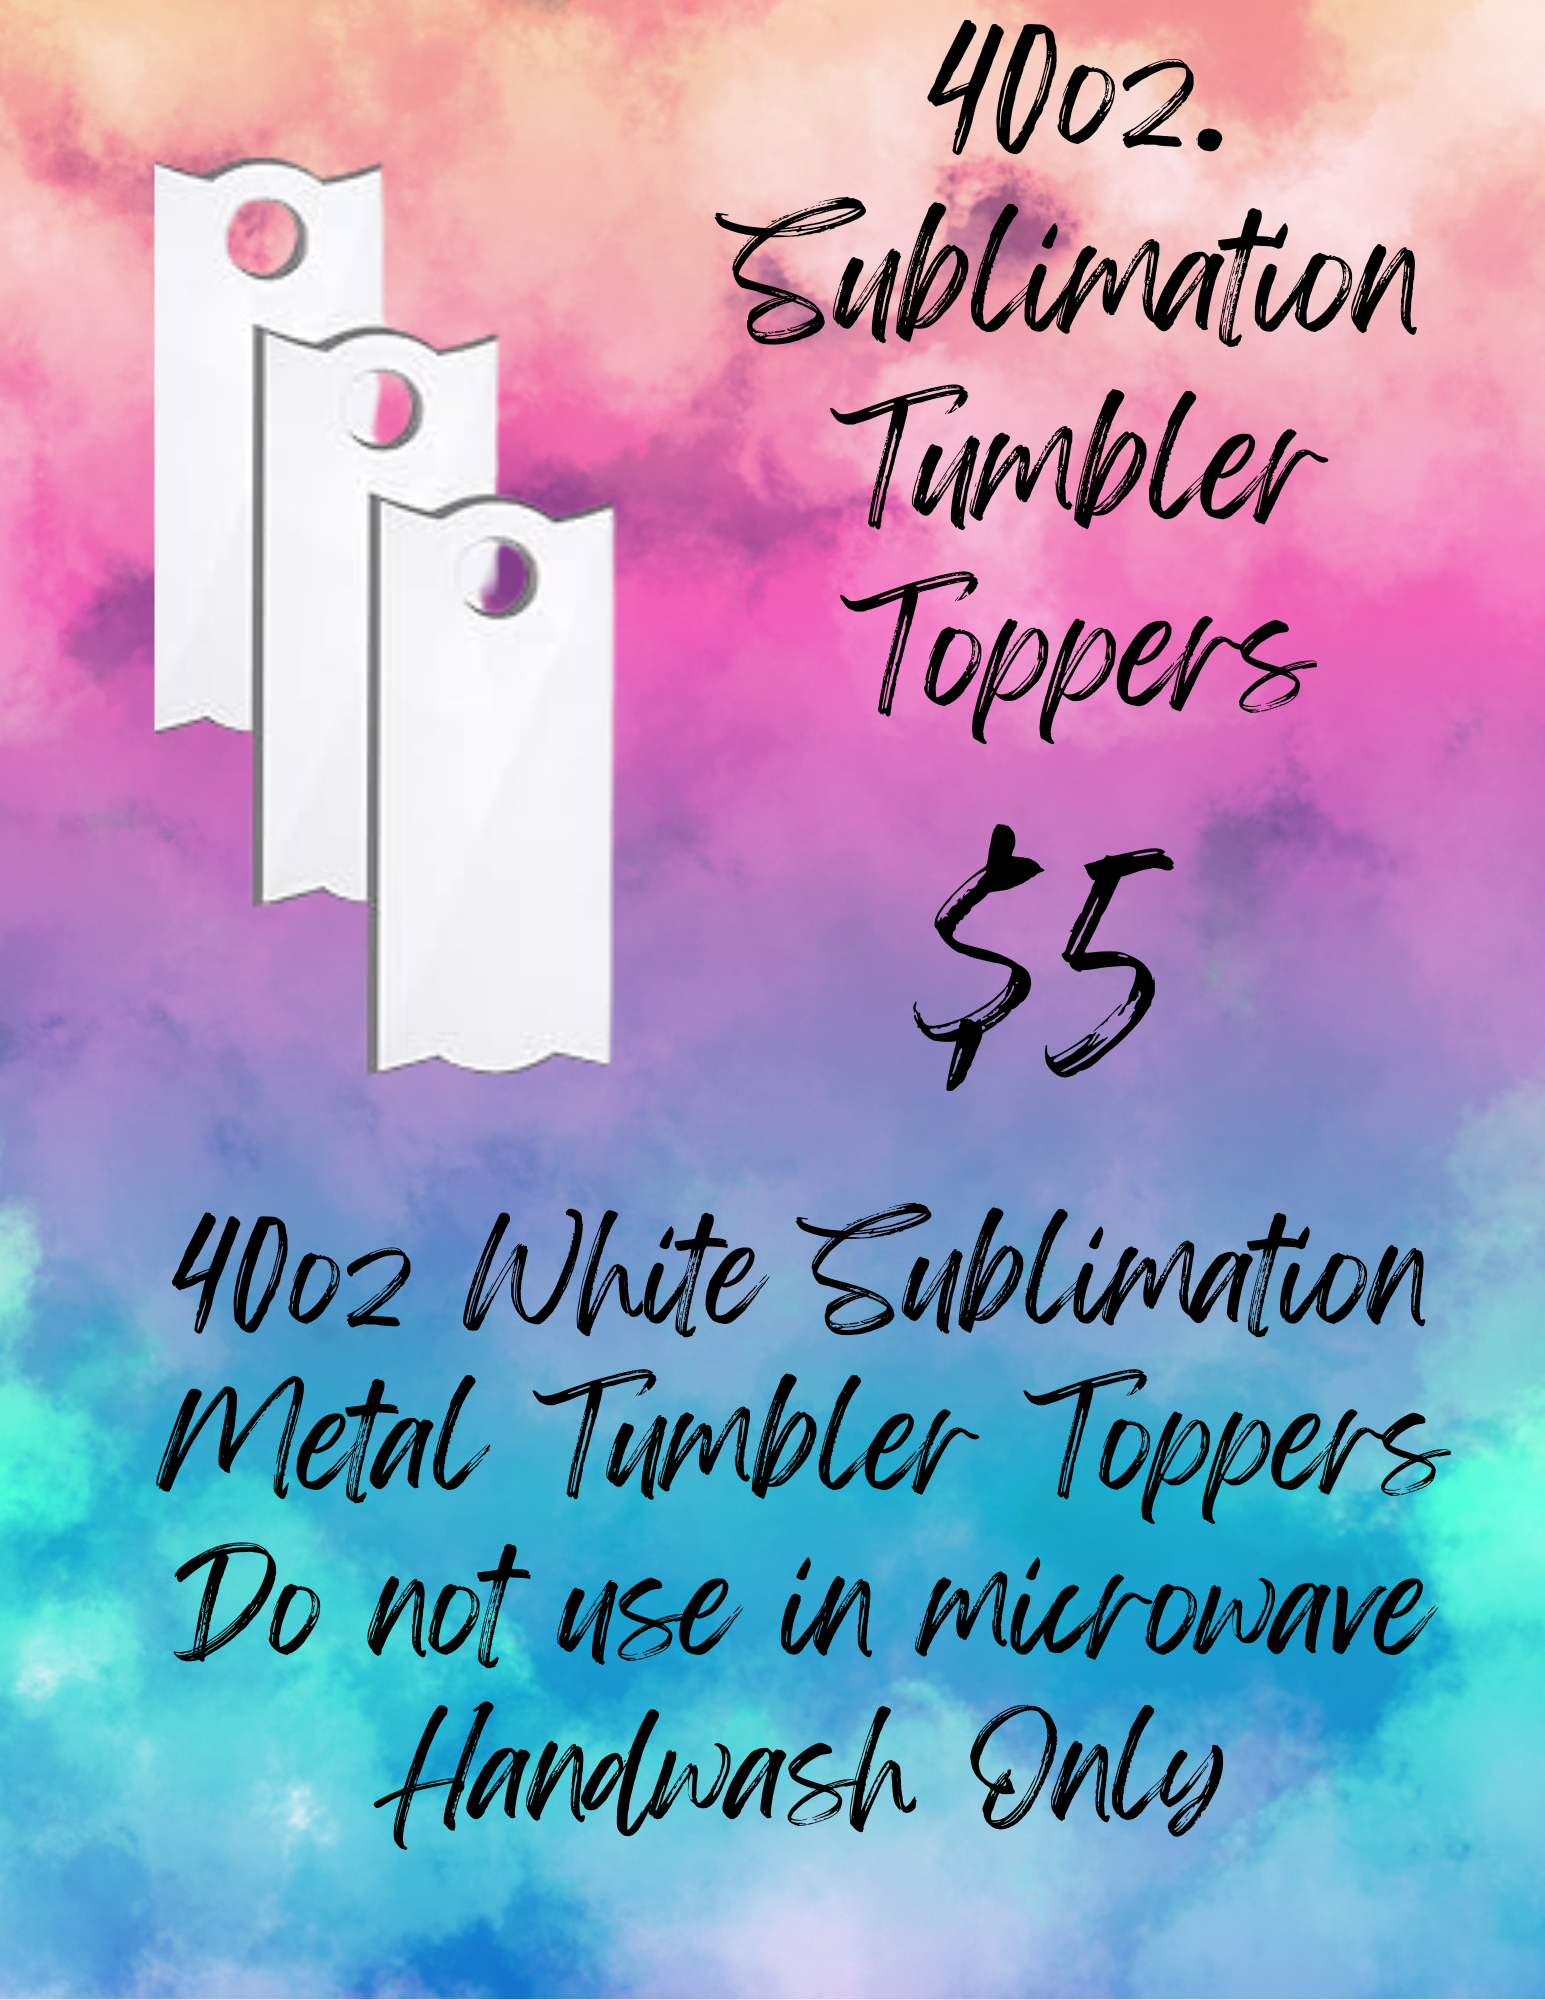 40oz Tumbler Toppers (Sublimation)